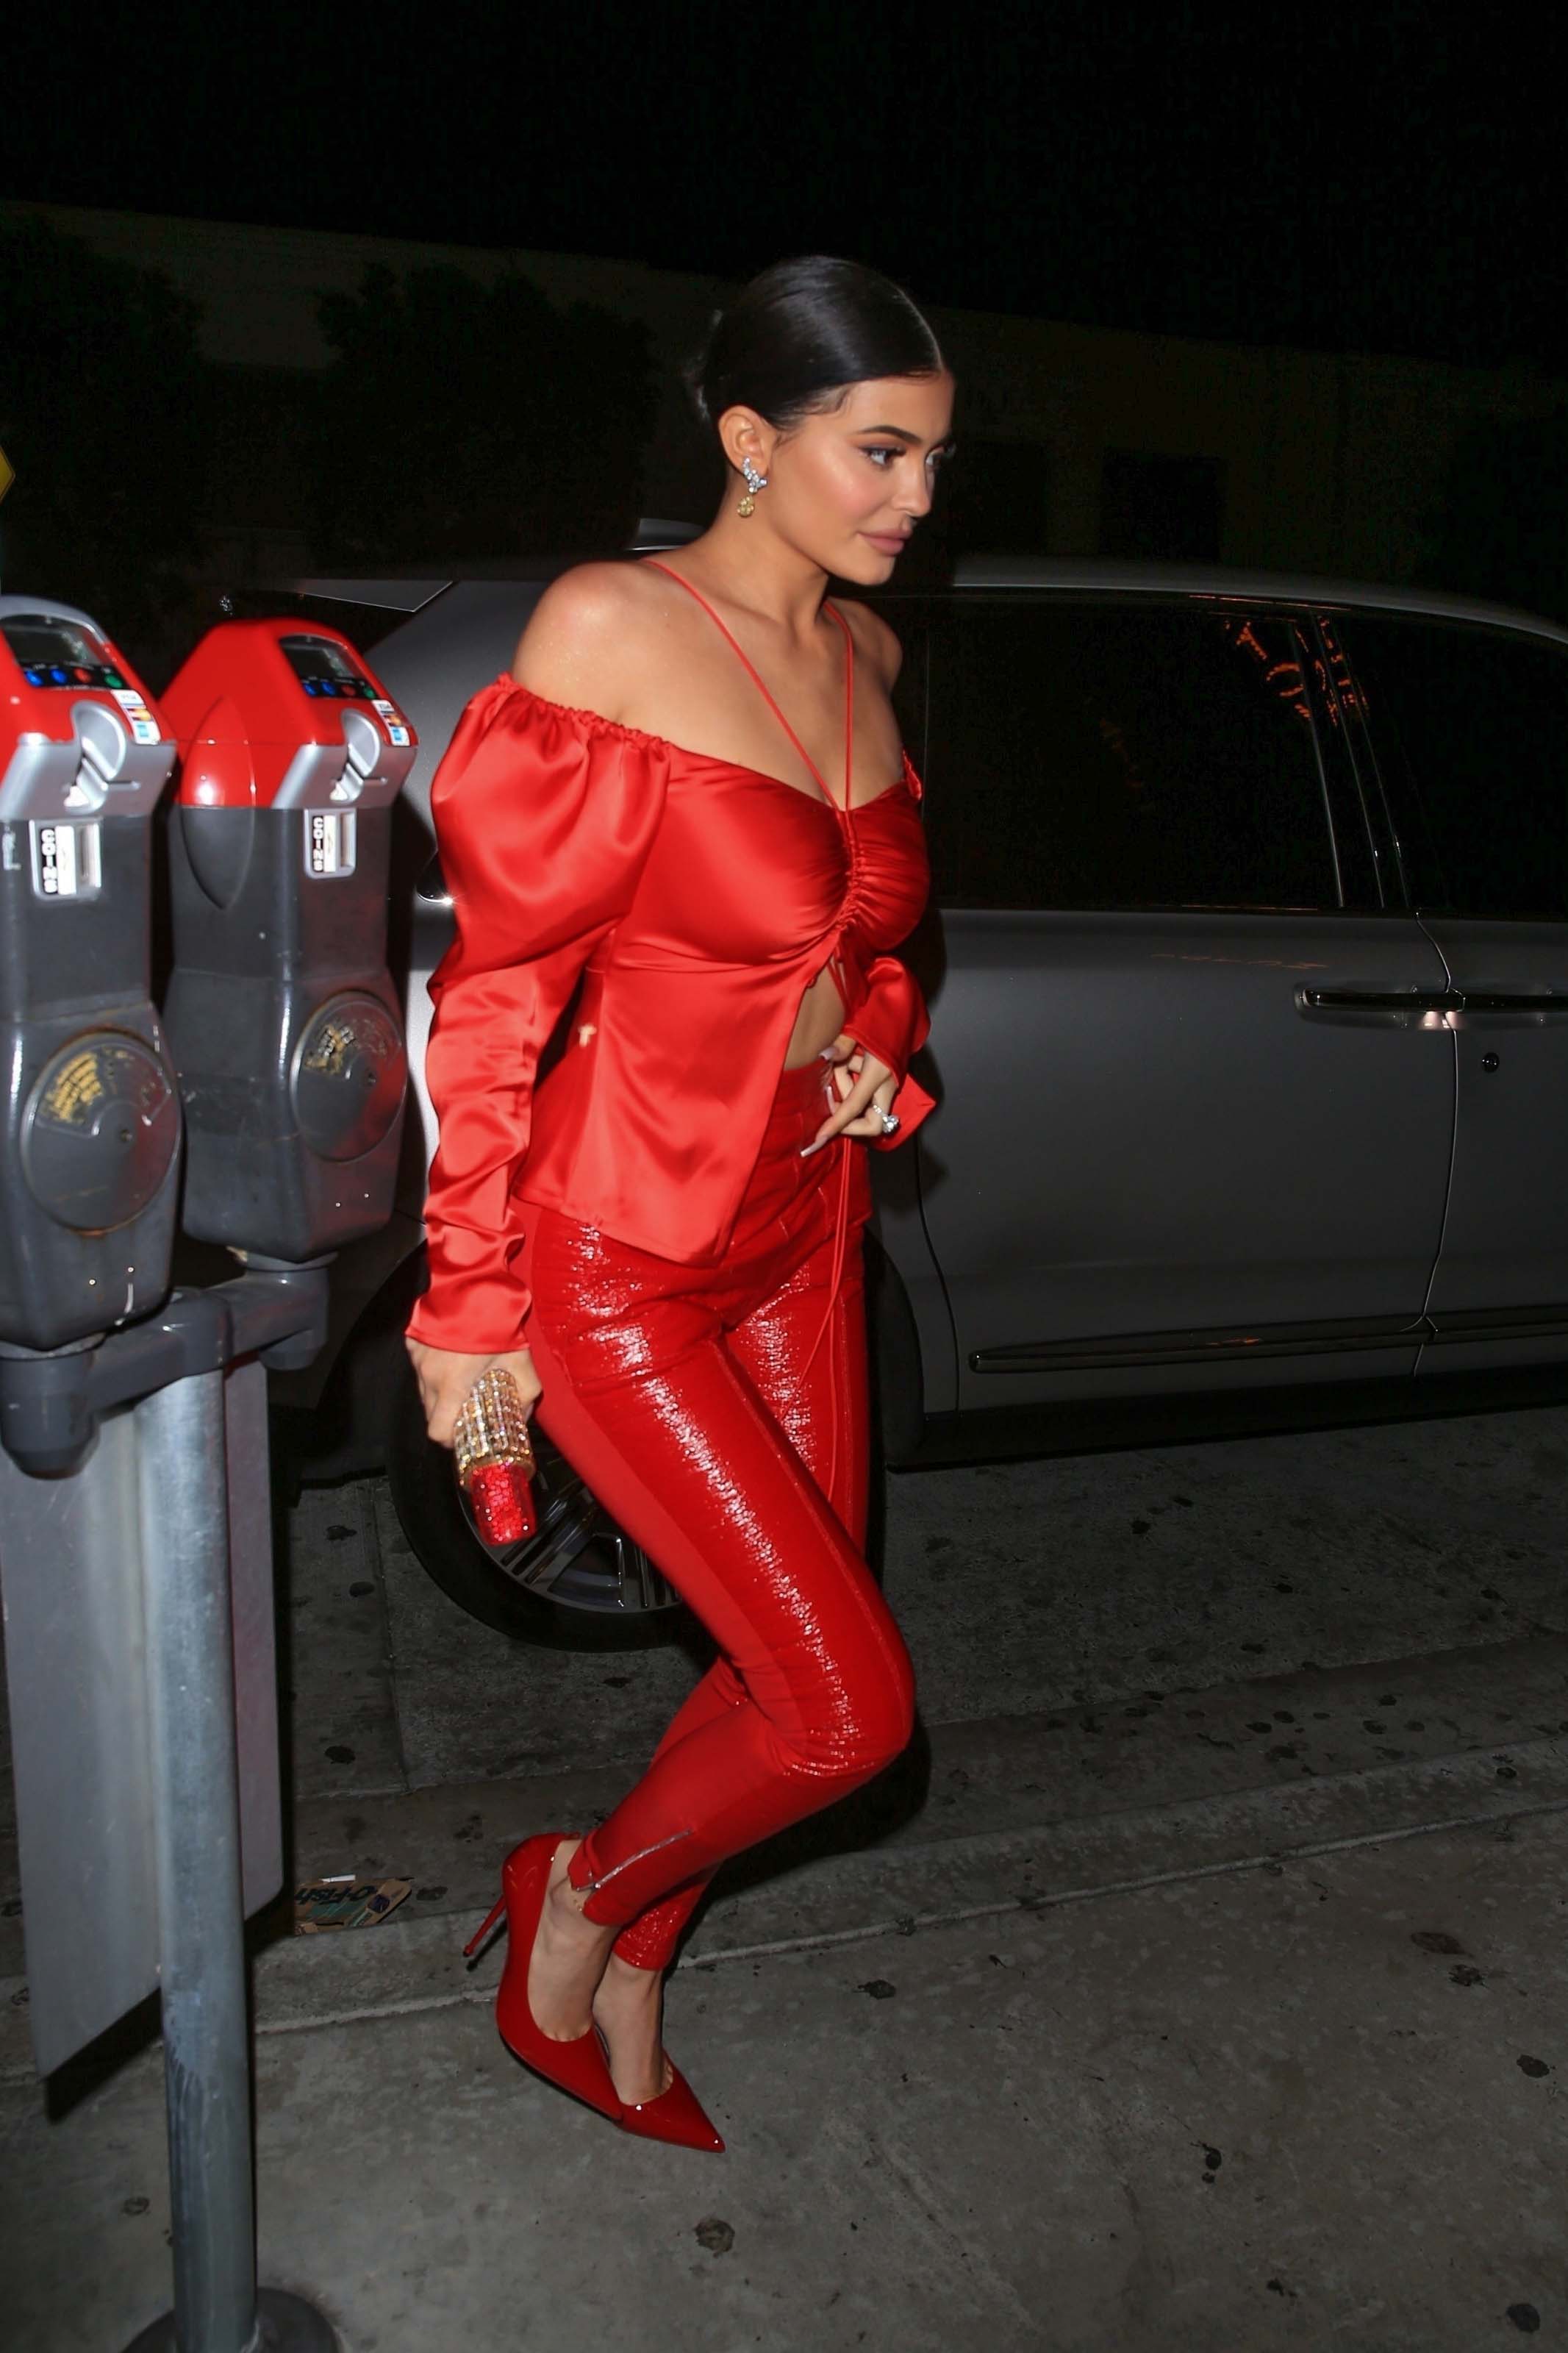 Kylie Jenner arrives for dinner at catch restaurant